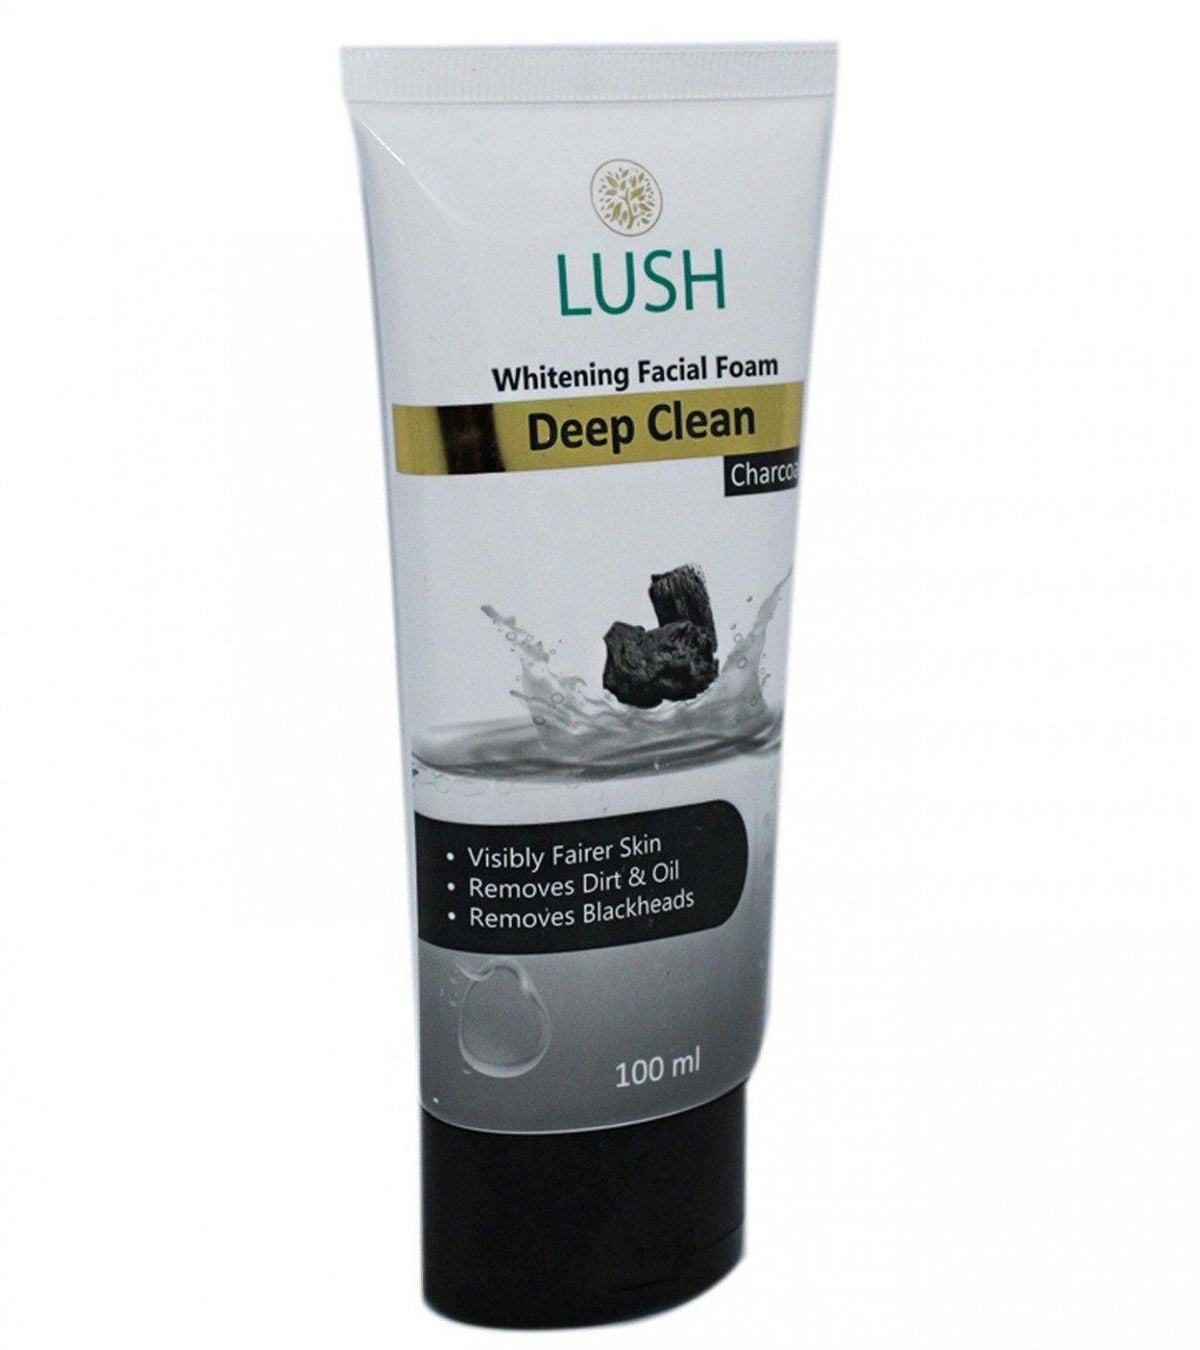 LUSH Charcoal Whitening Facial Foam Daily Face Wash by Nexton